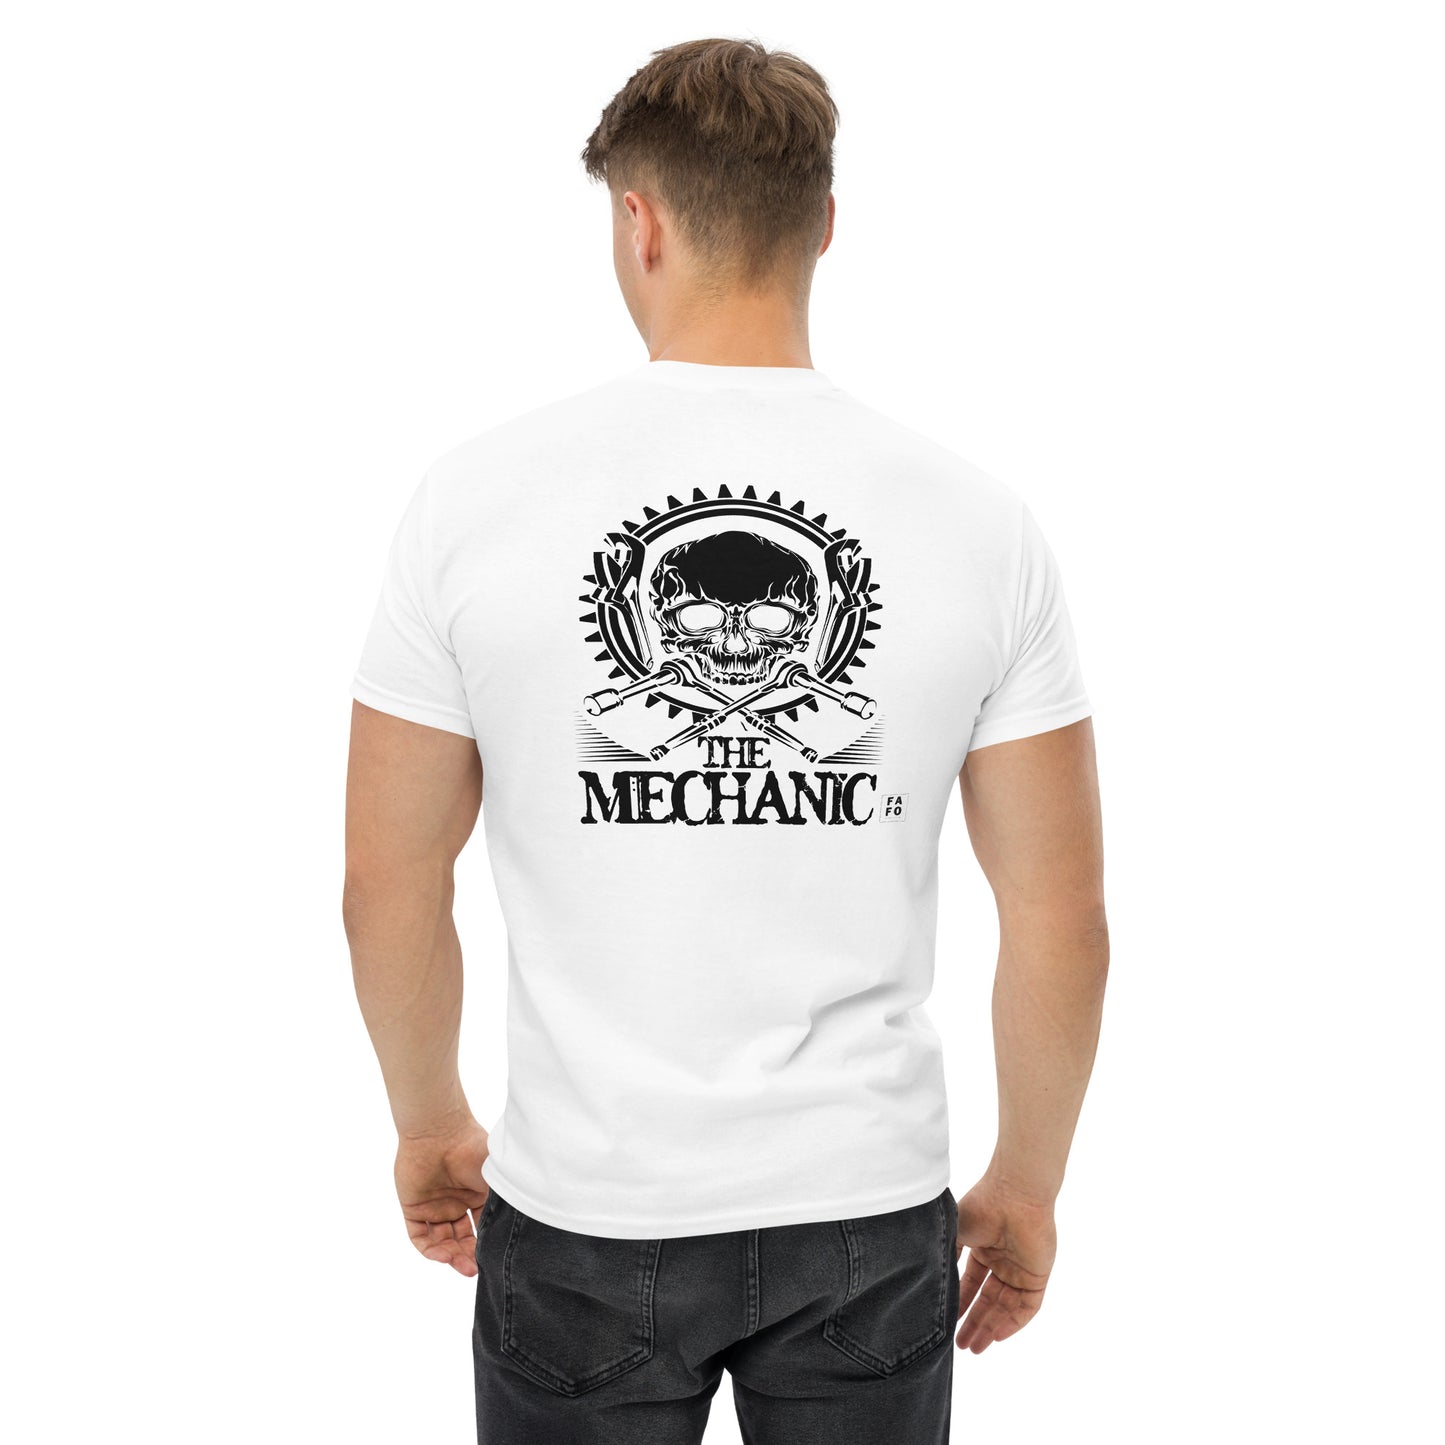 Men's Gildan Cotton Tee - Mechanic - FAFO Sportswear